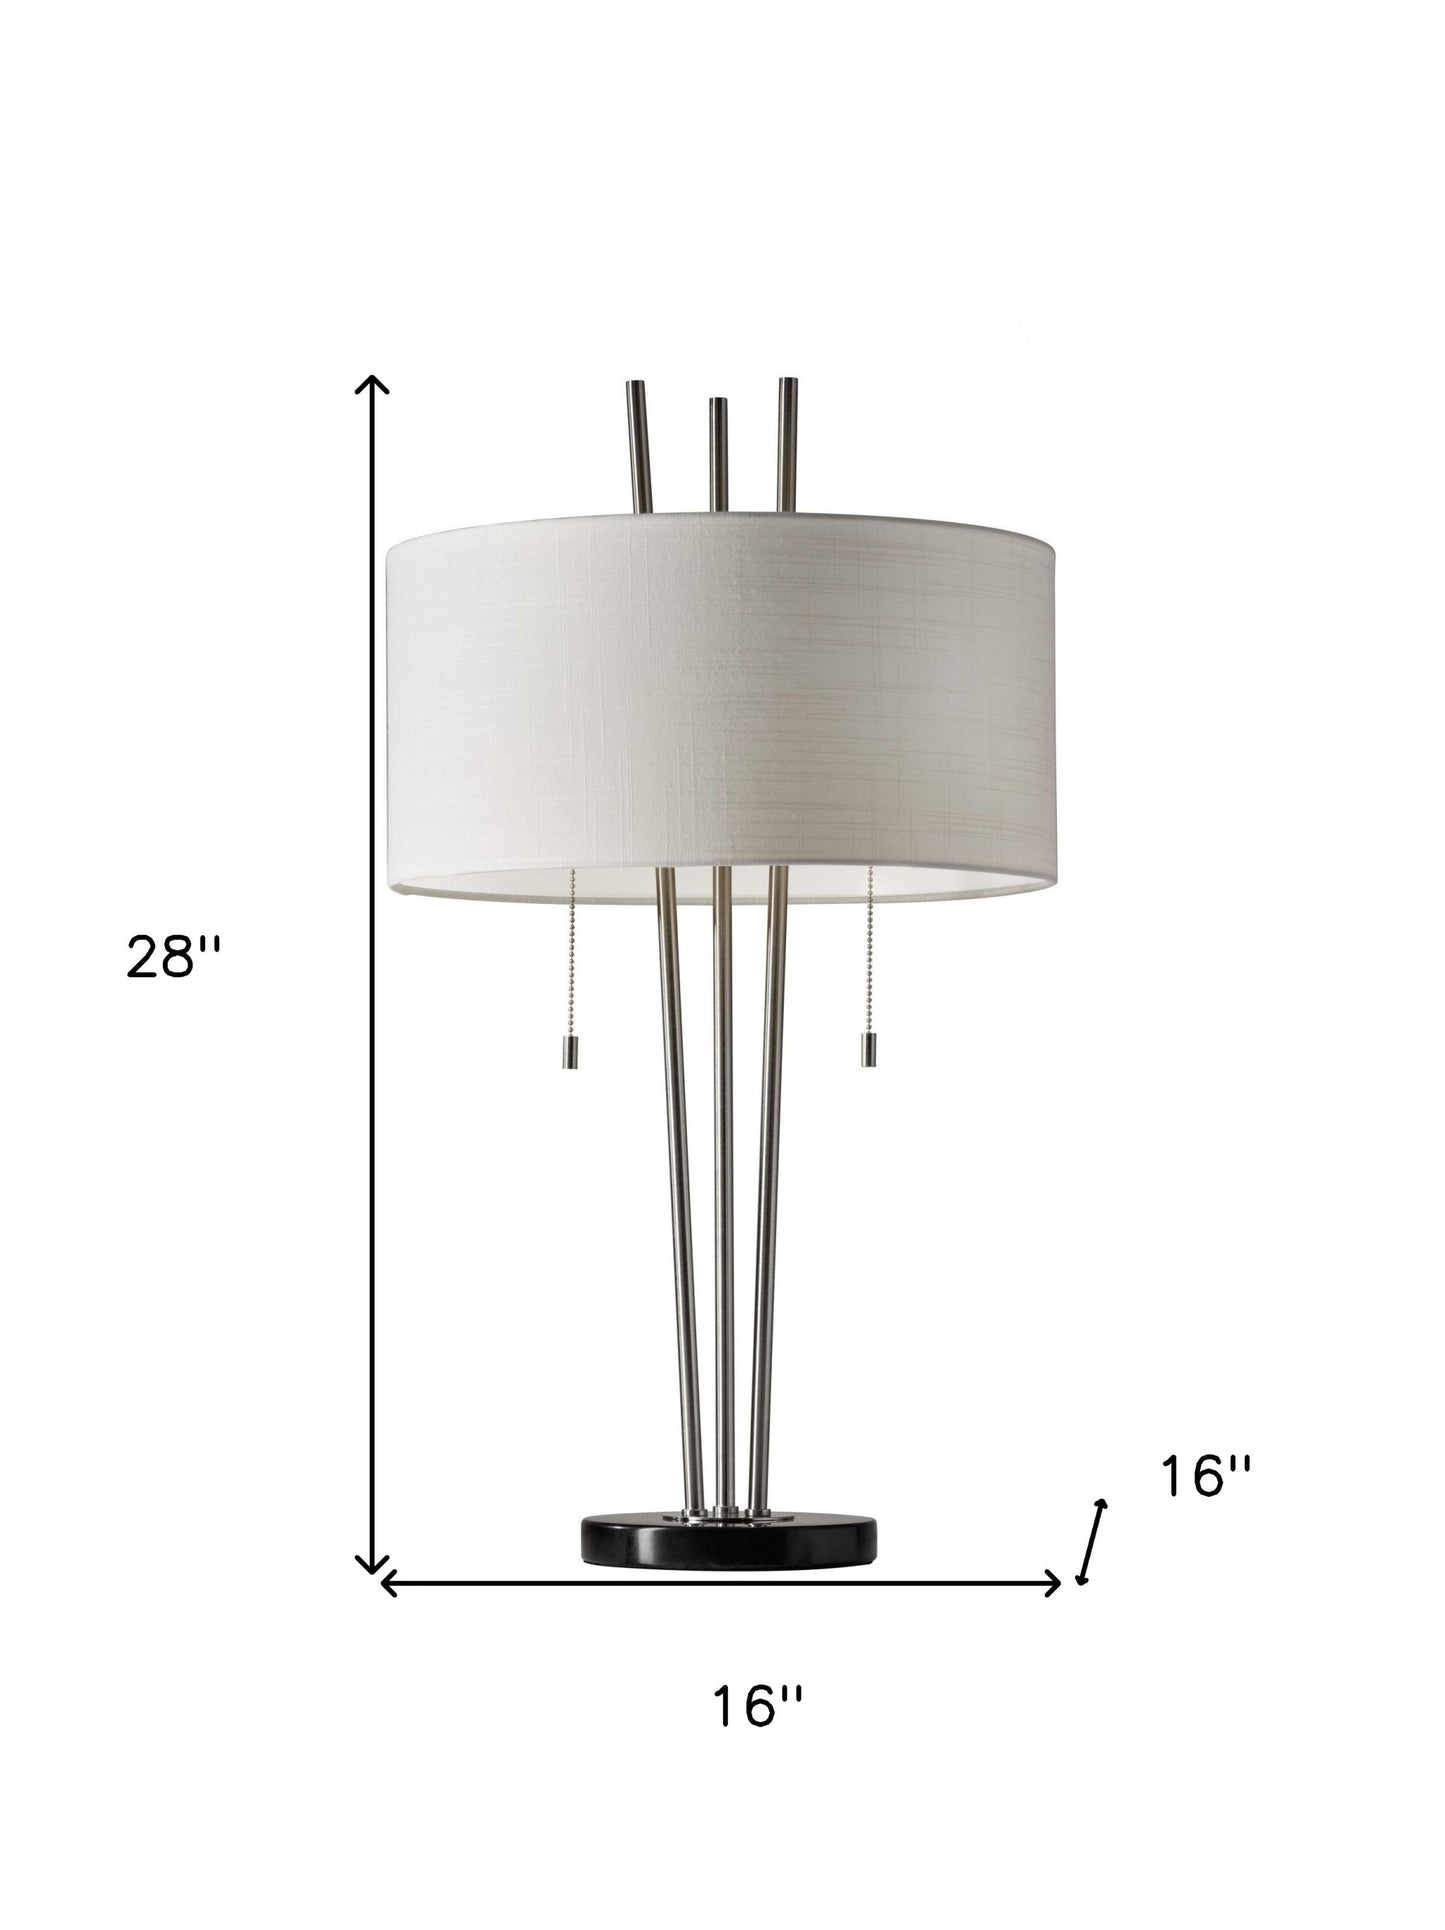 Stylish Triple Pole Brushed Steel Metal Table Lamp